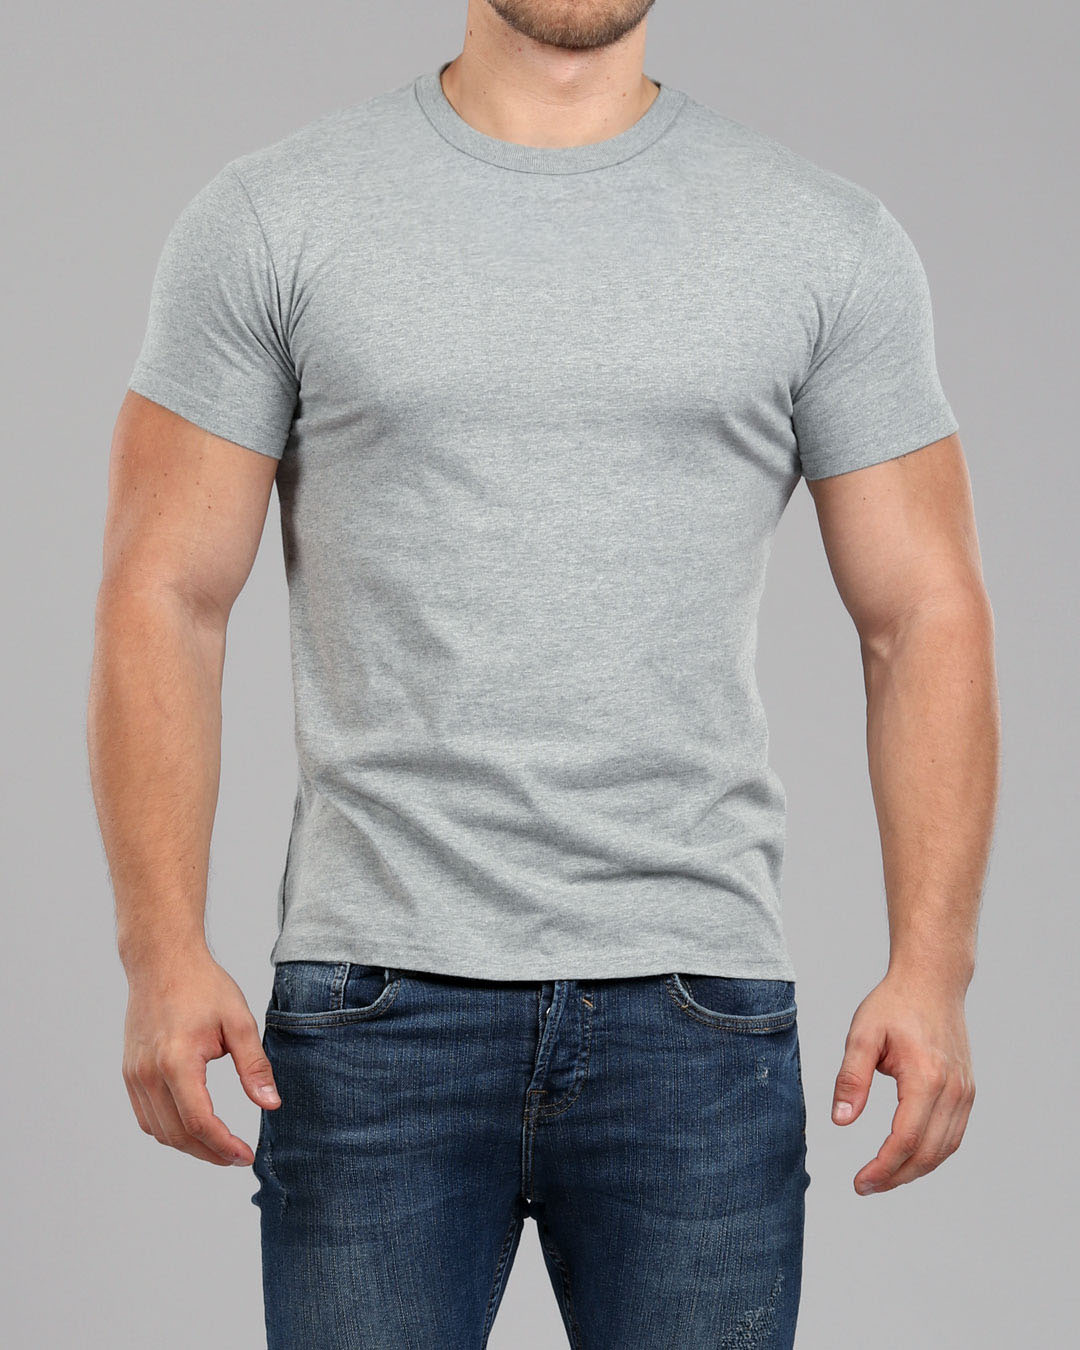 Crew Round Neck T-Shirt Light Grey - Muscle Fit Basics